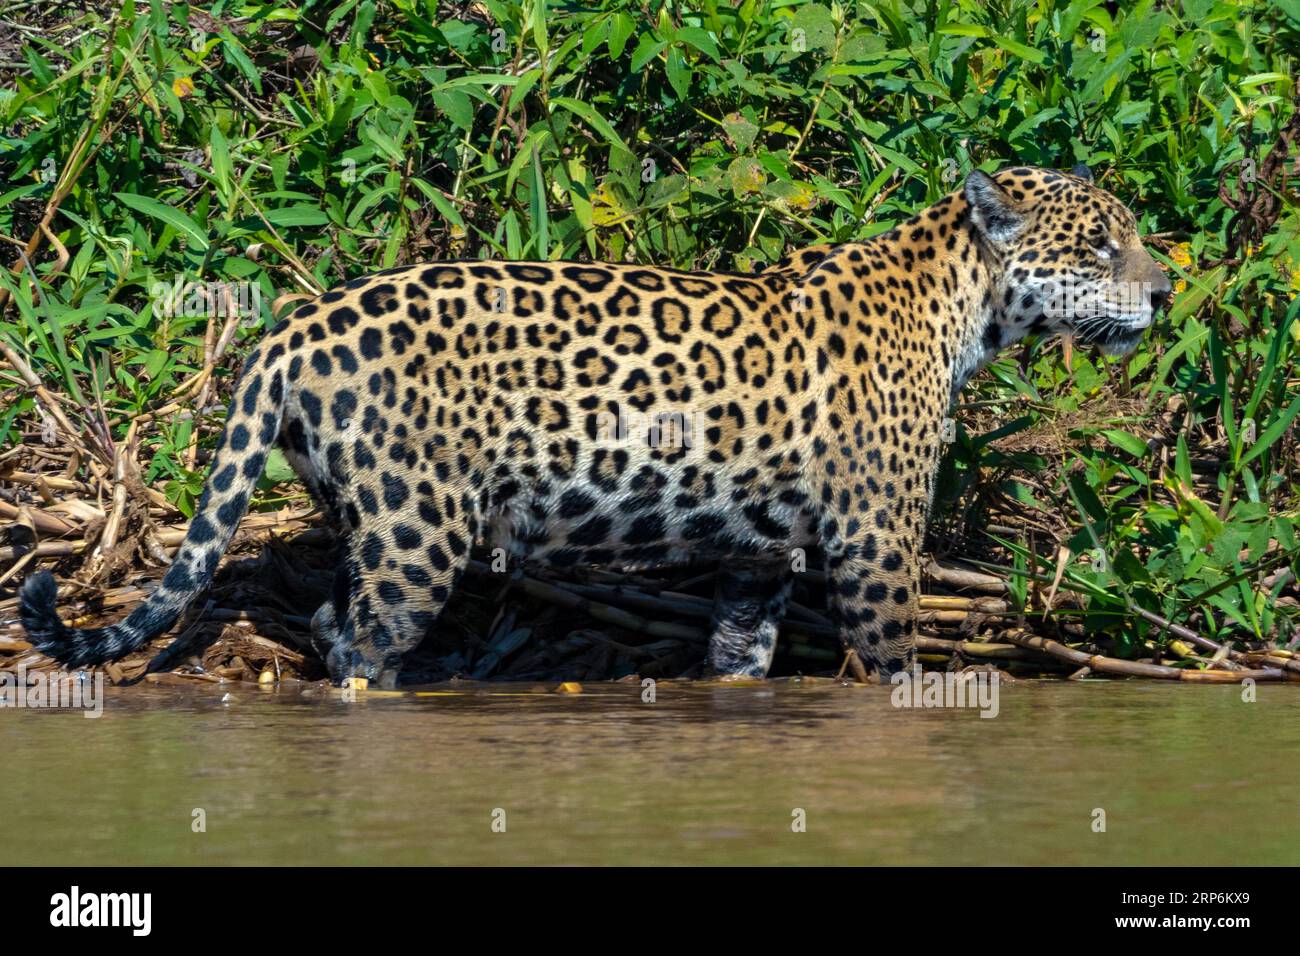 Jaguar-Jagd Für Erwachsene. Stockfoto